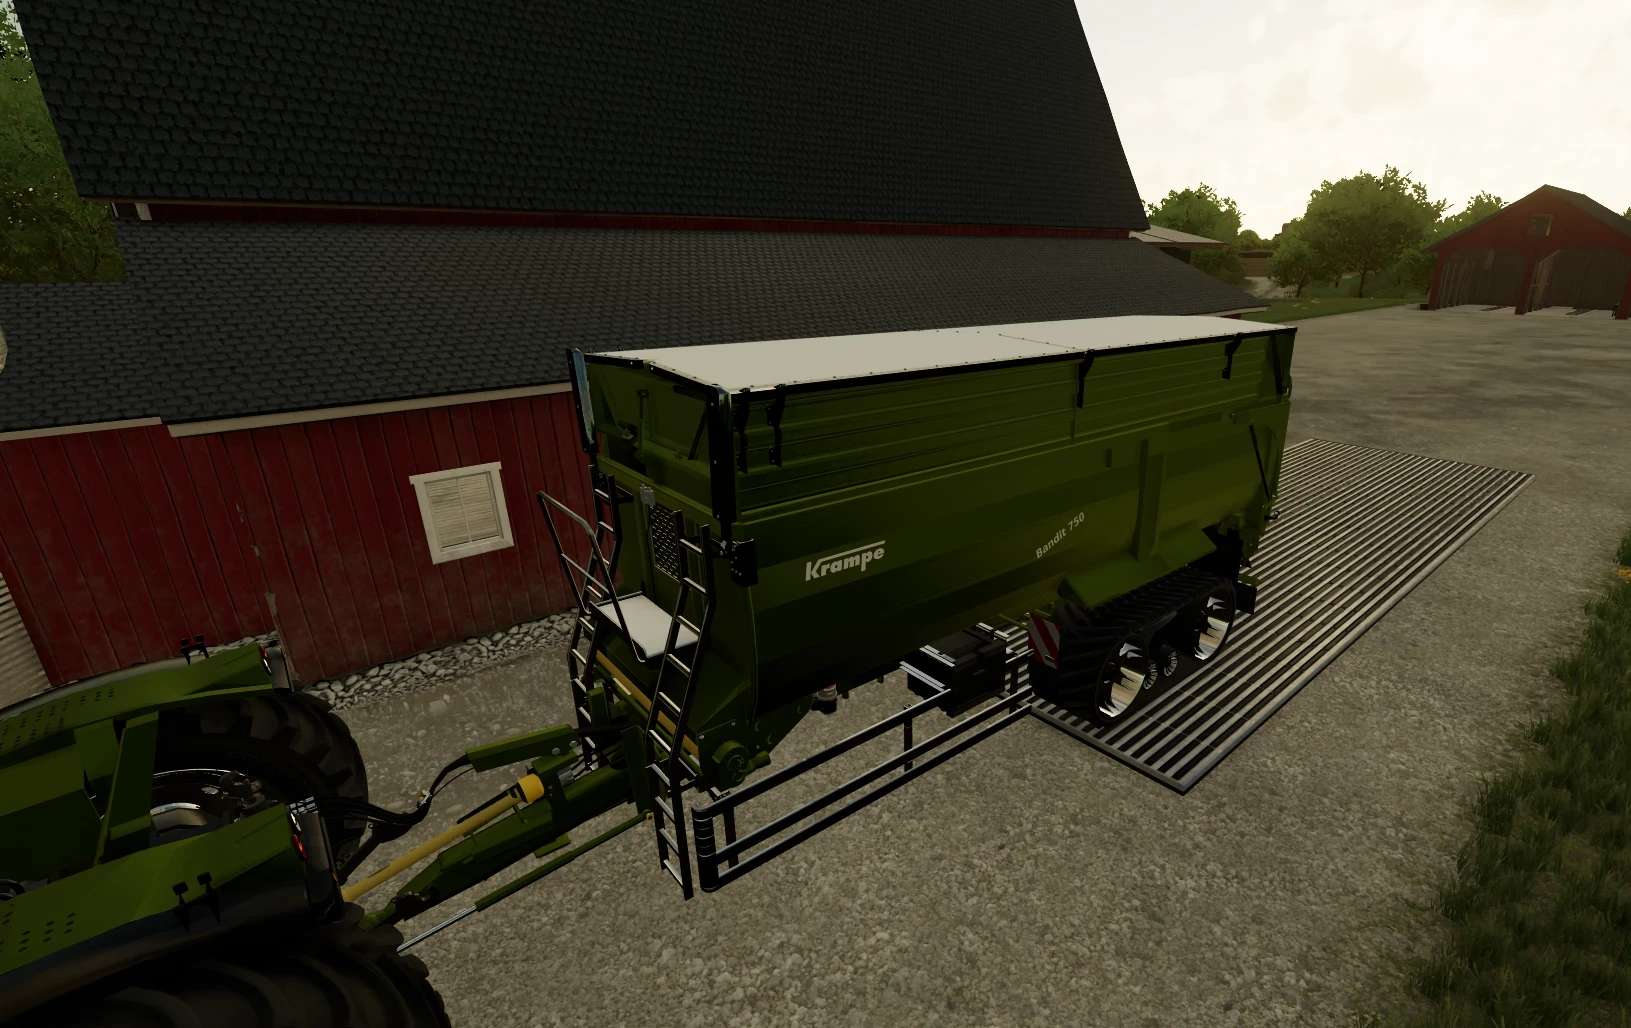 Krampe Bandit 750 Terra Trac V1006 Fs22 Mod Farming Simulator 22 Mod 6985